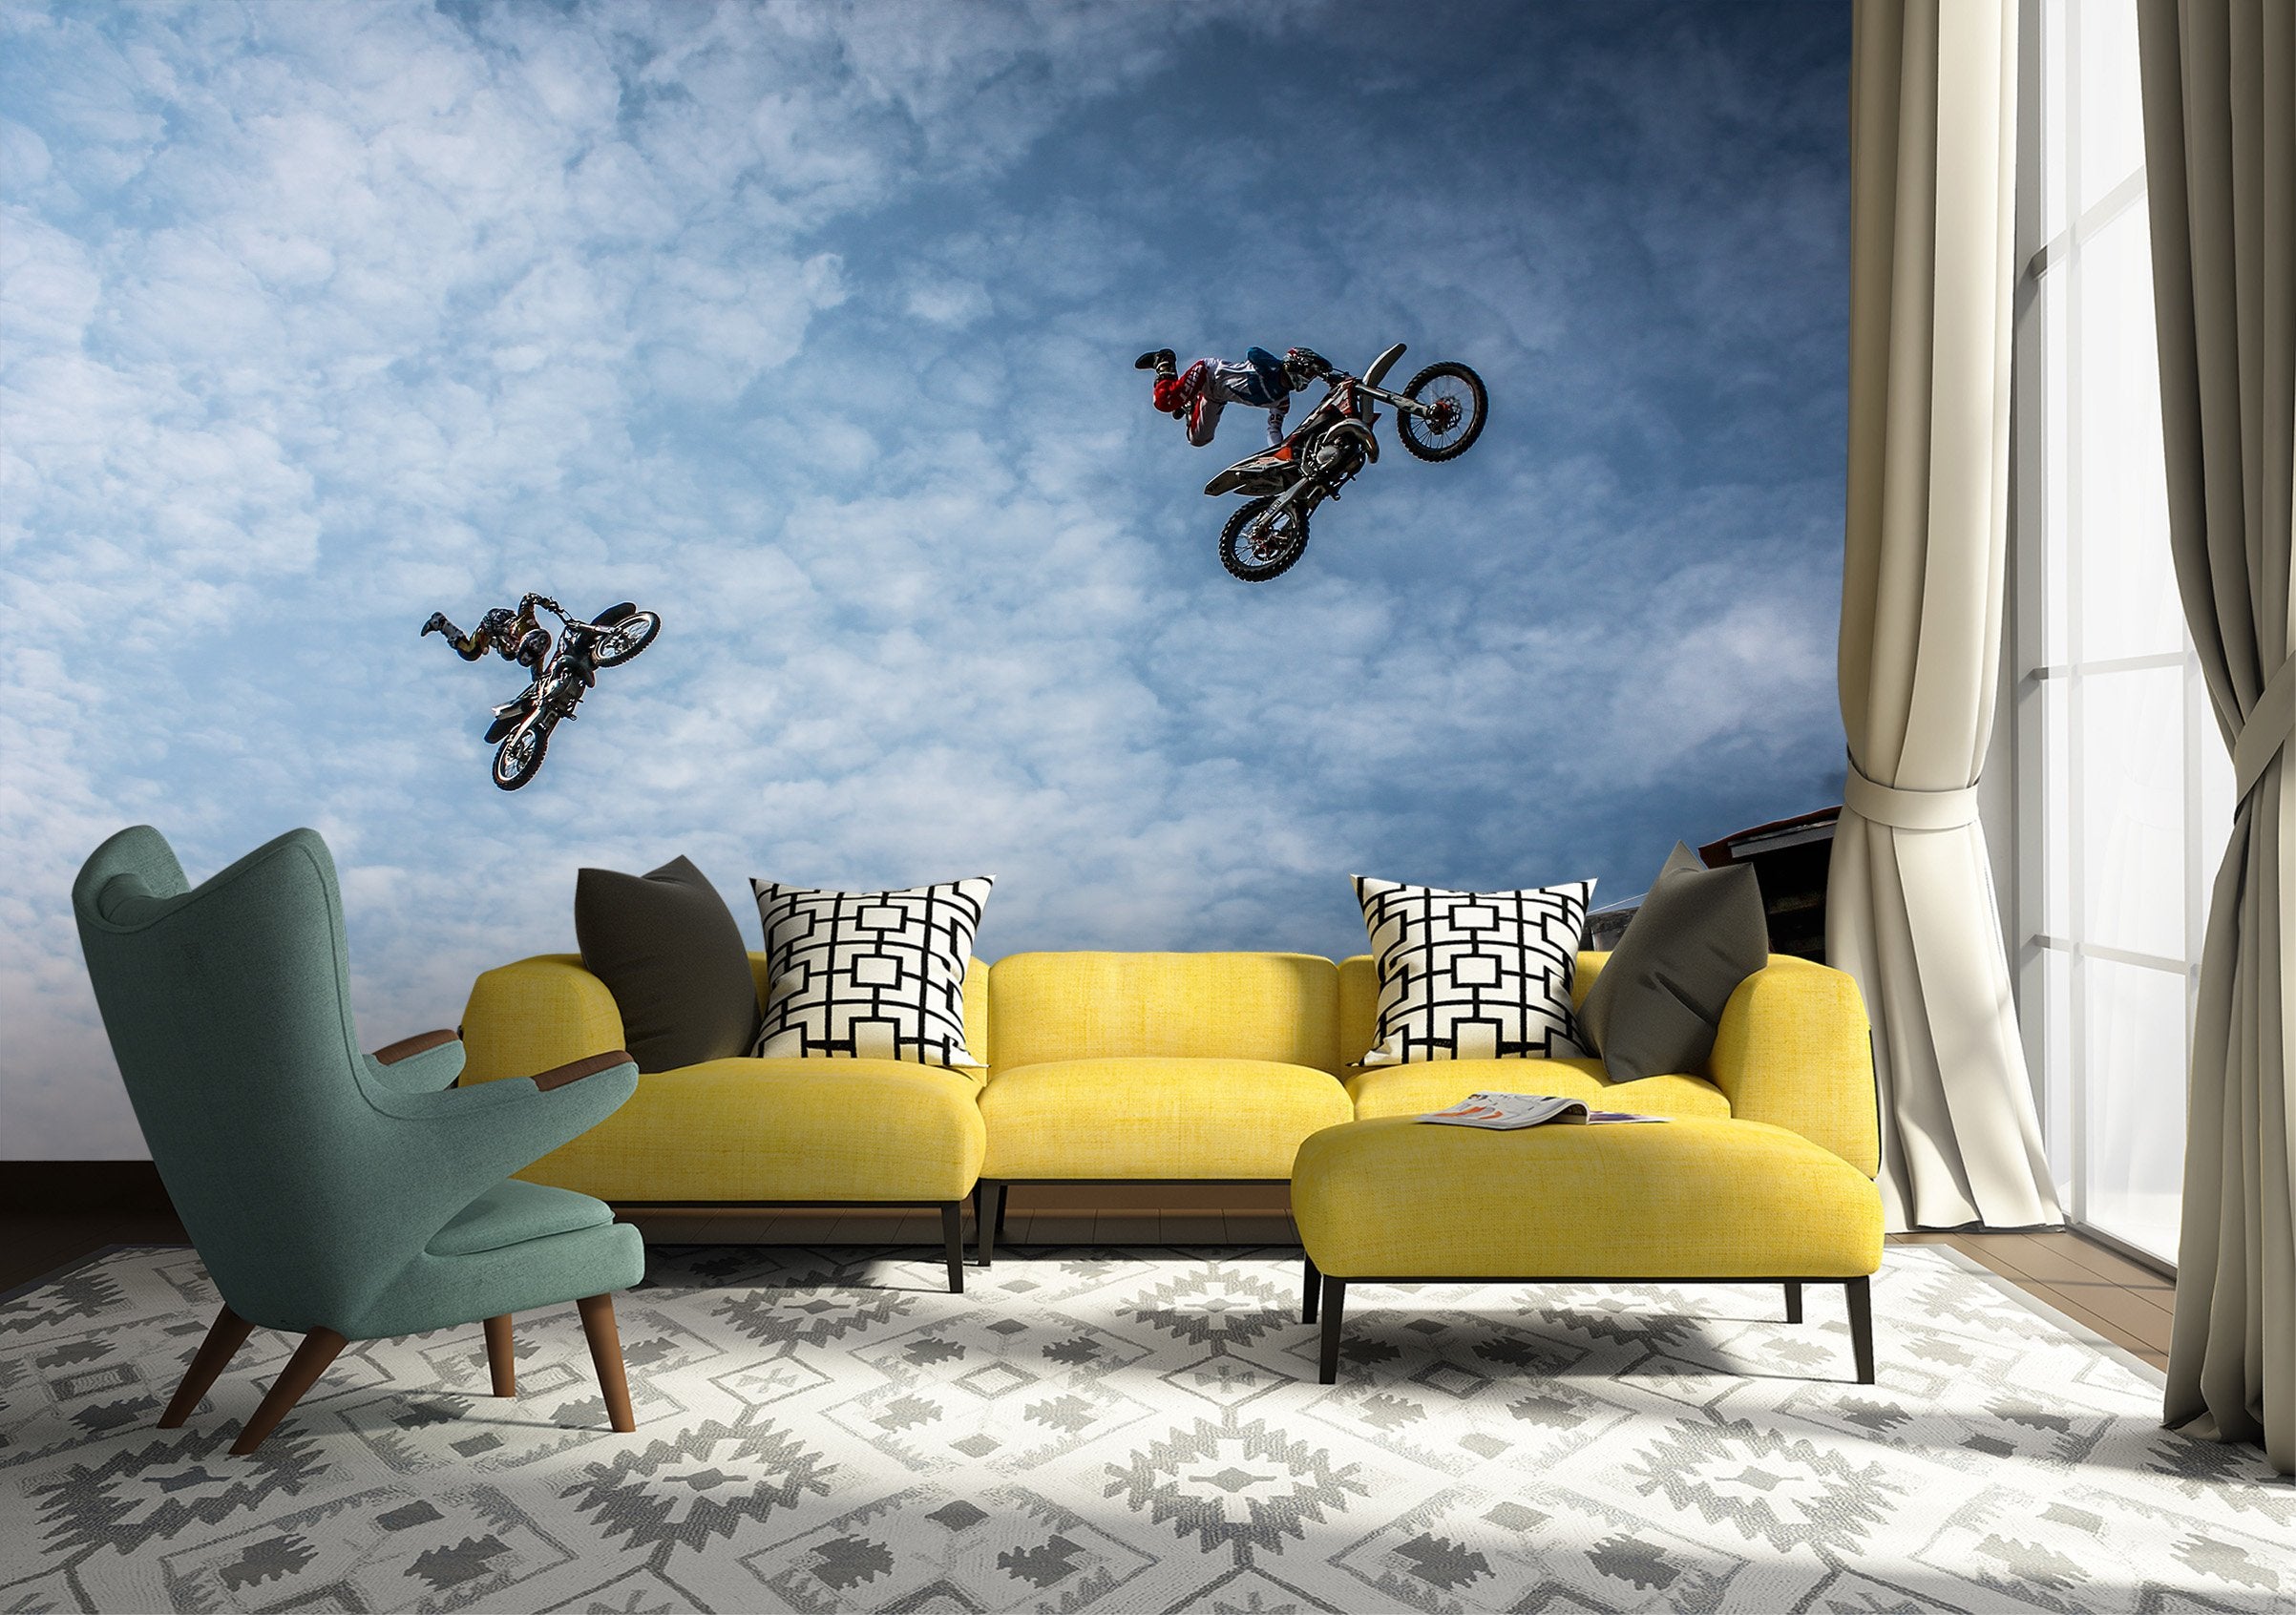 3D Biker 926 Vehicle Wall Murals Wallpaper AJ Wallpaper 2 